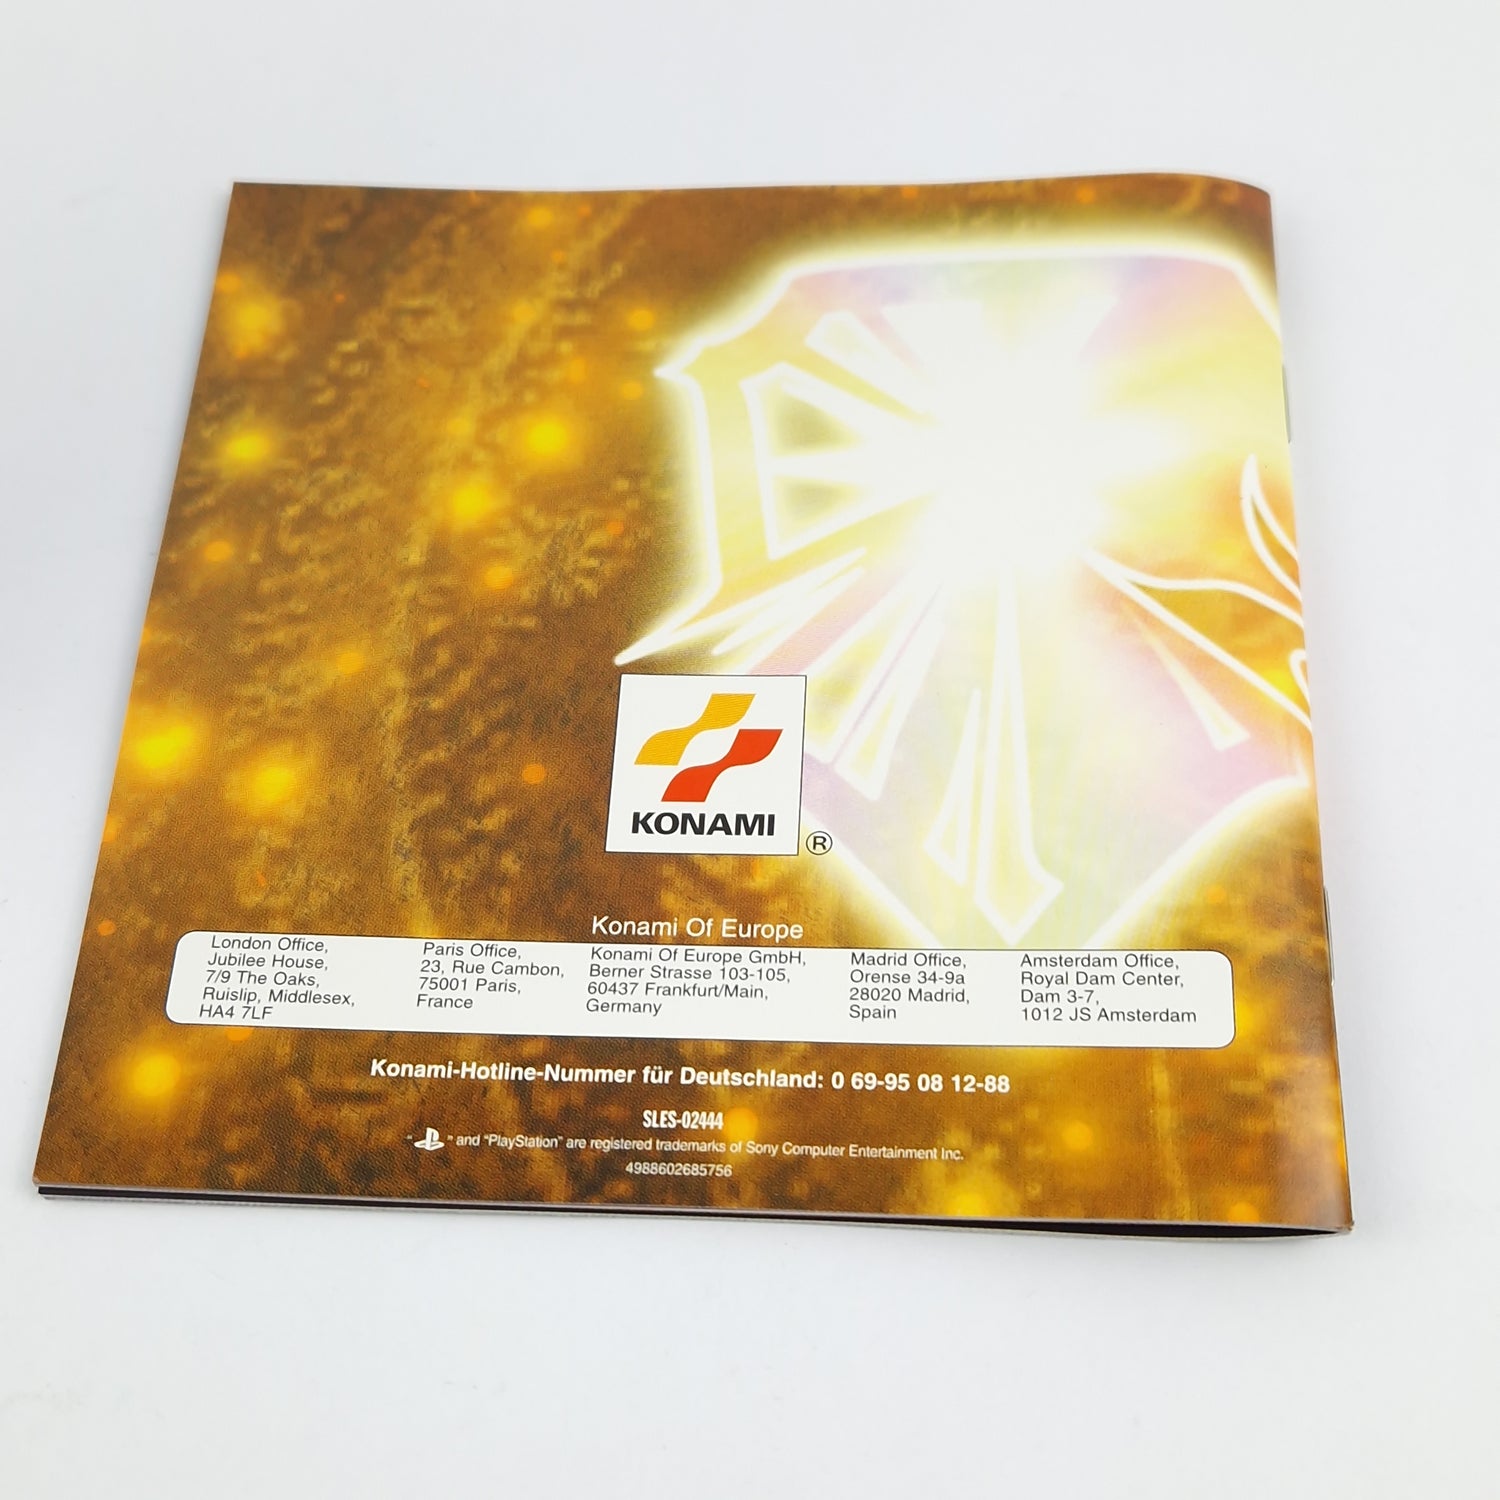 Playstation 1 Spiel : Suikoden II - CD Anleitung OVP | SONY PS1 PSX PAL Konami